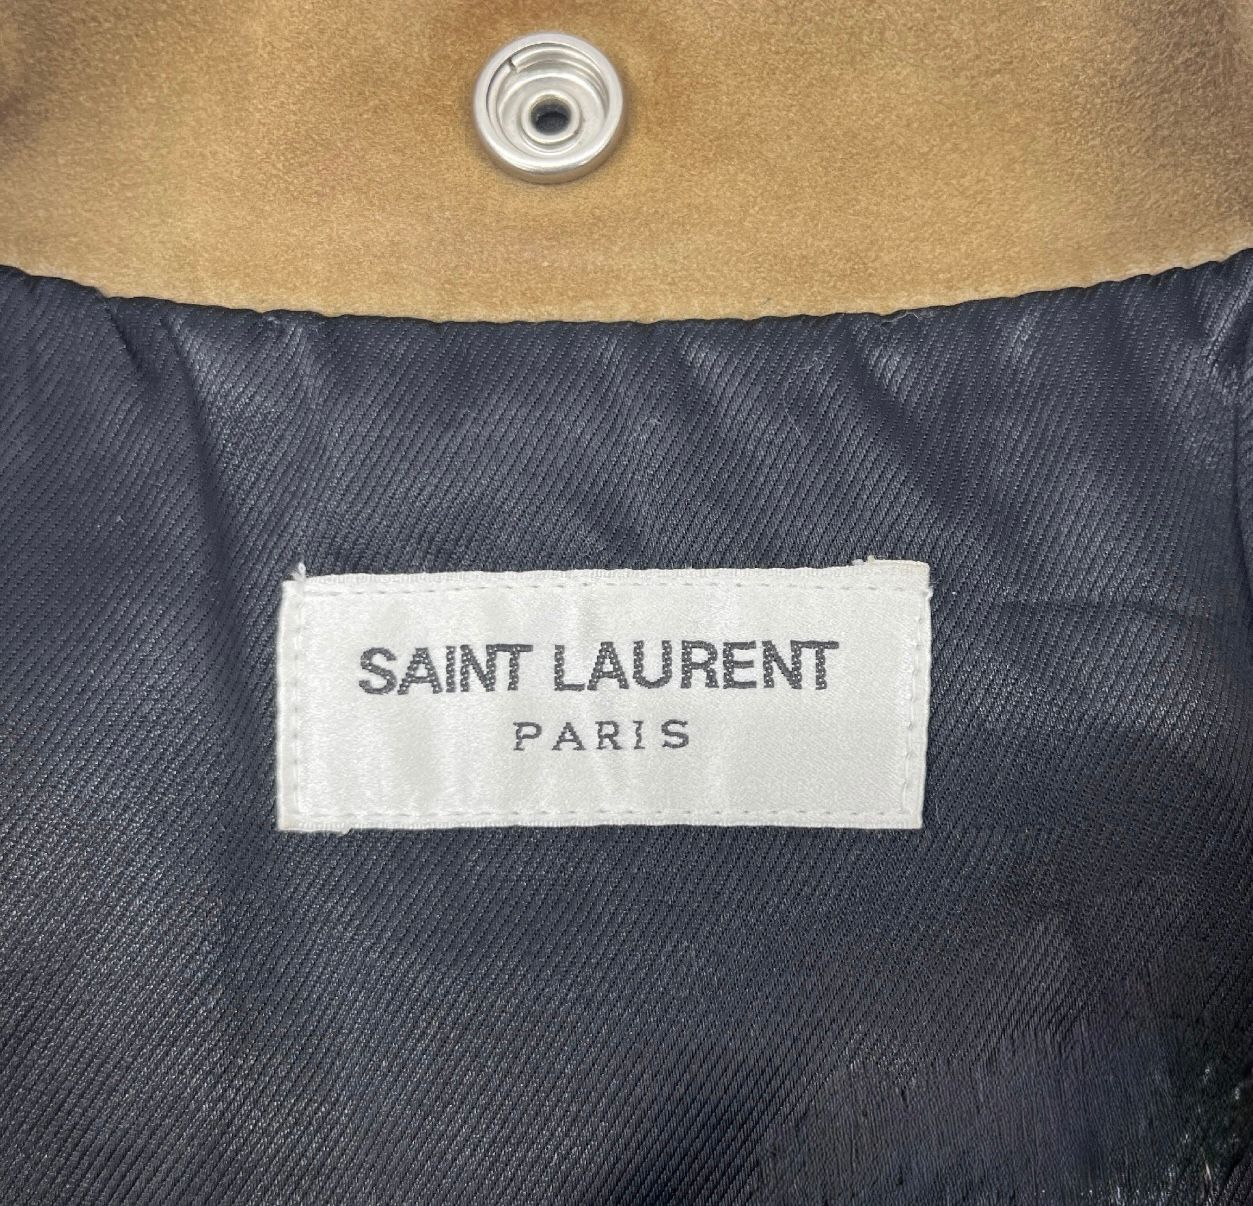 Saint Laurent Paris Tassel Jacket - 4